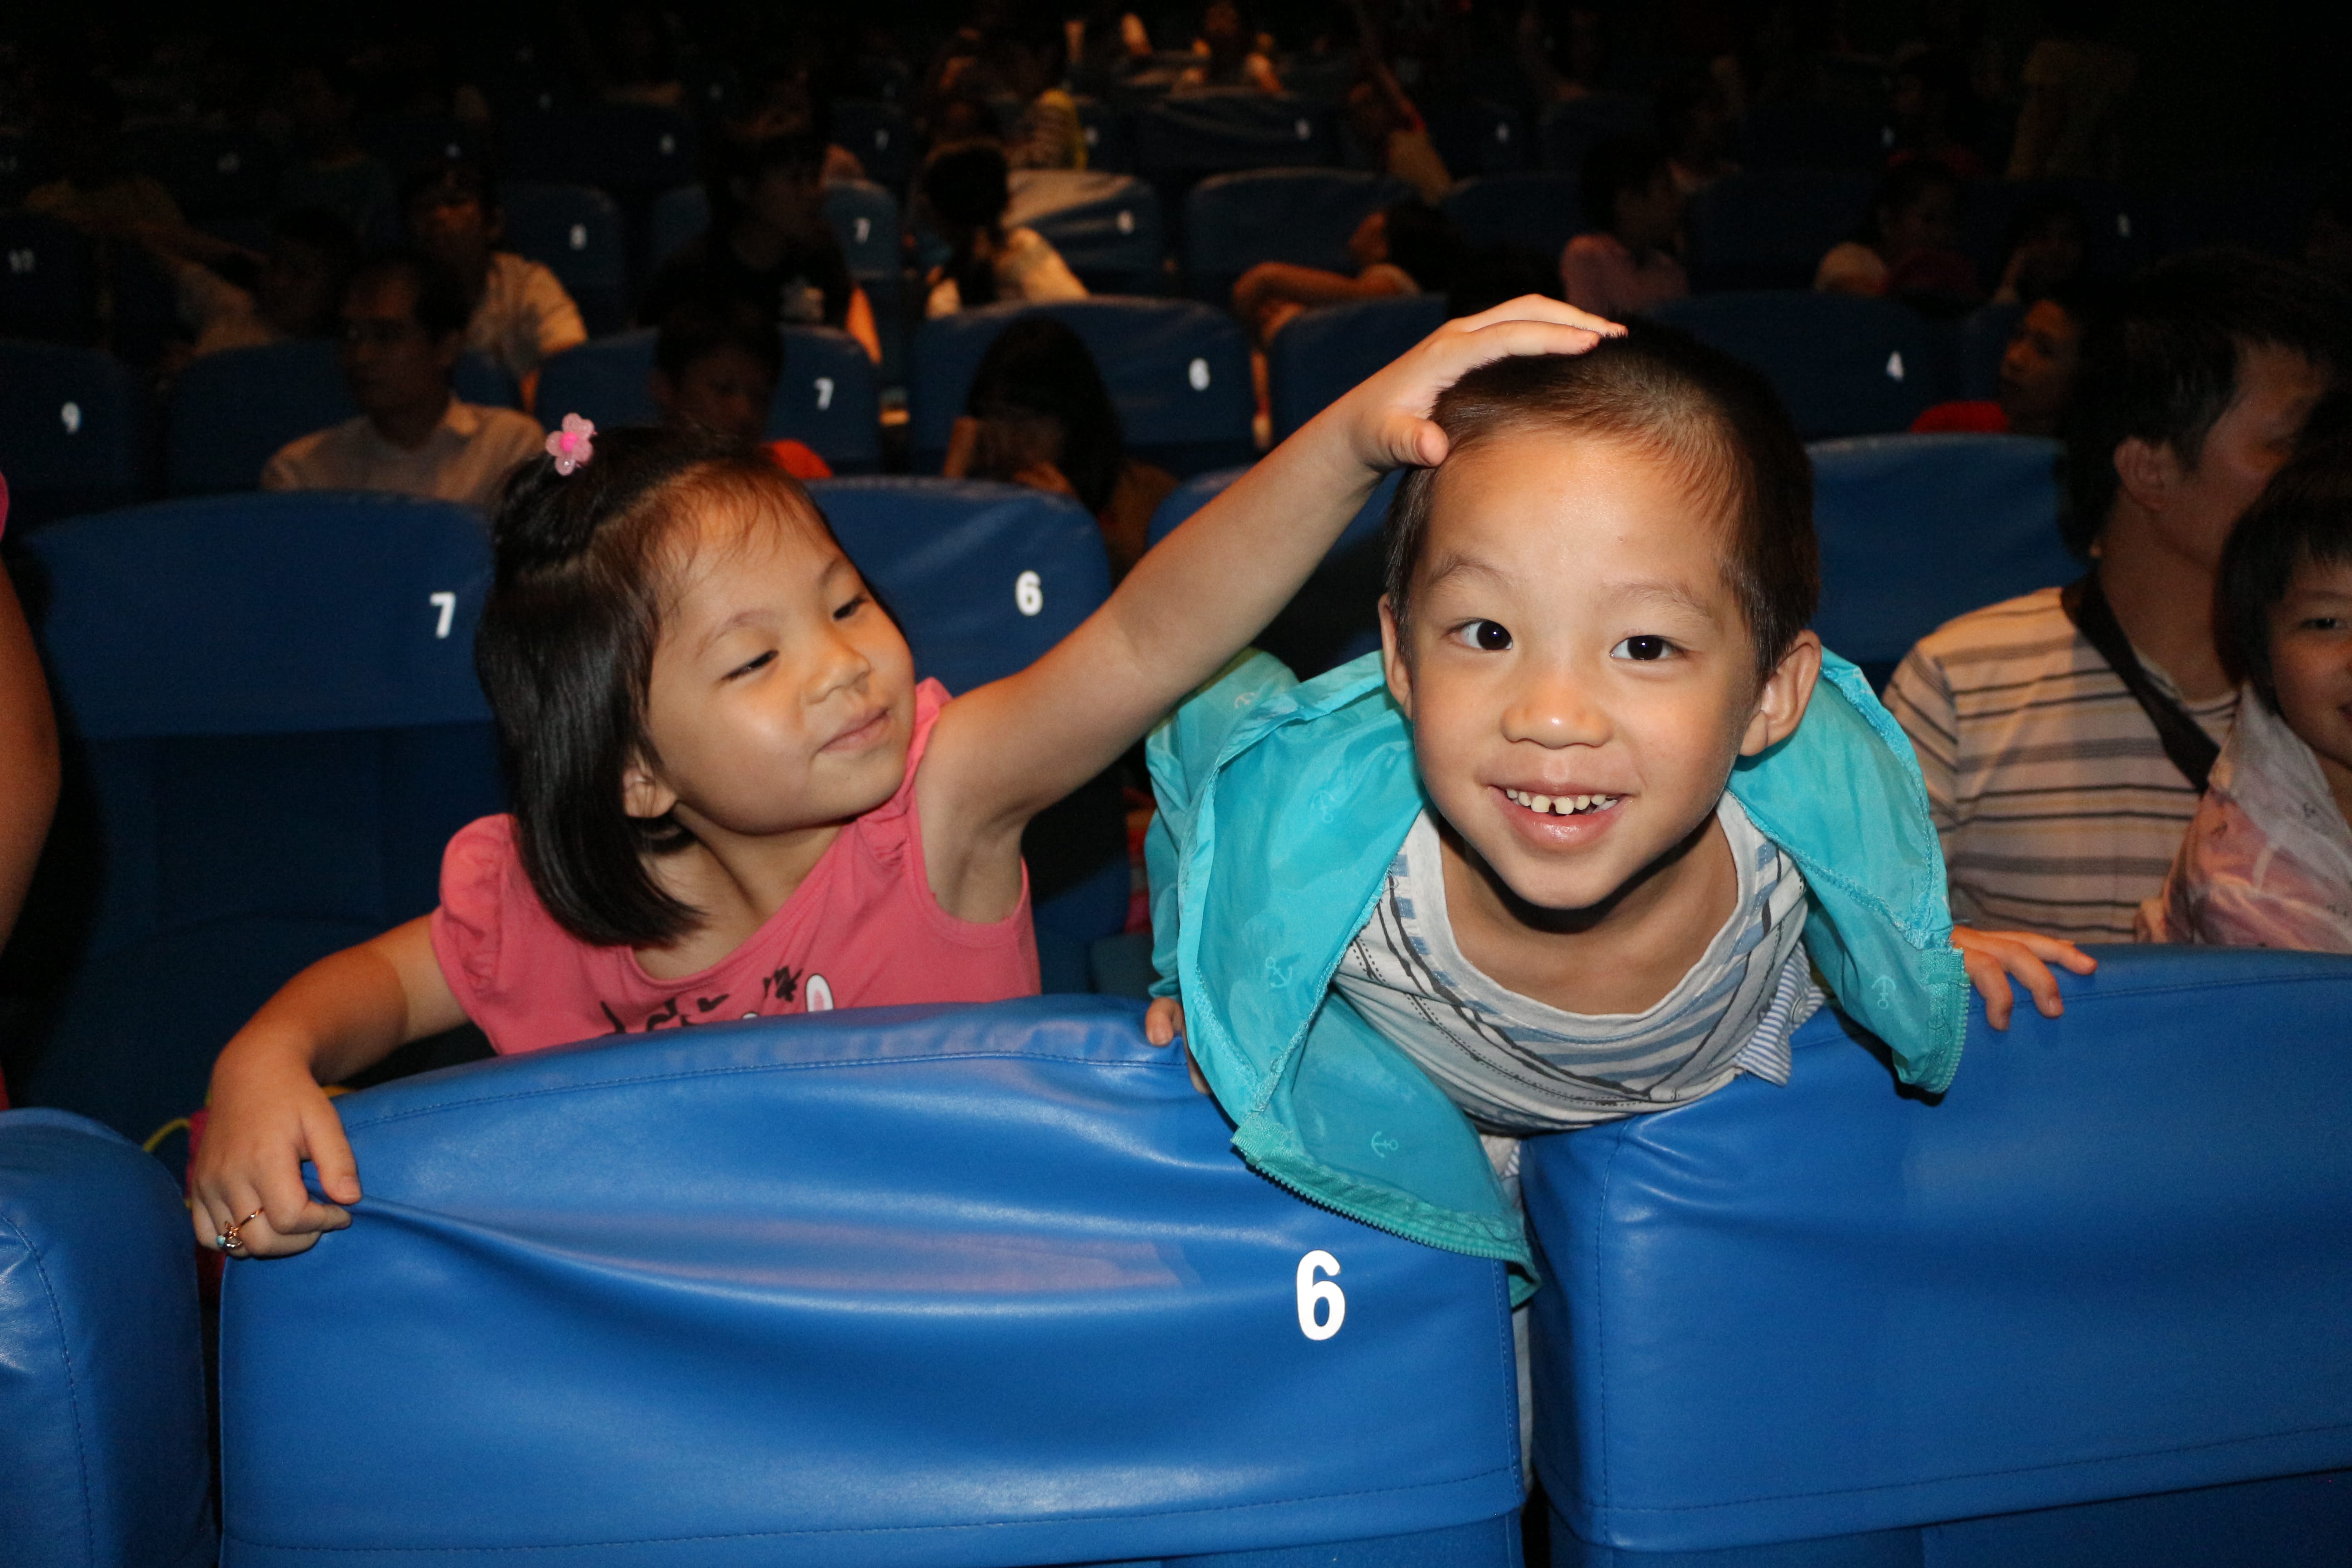 CESL Asia’s Kid’s Movie Day animates 80 local children’s summer